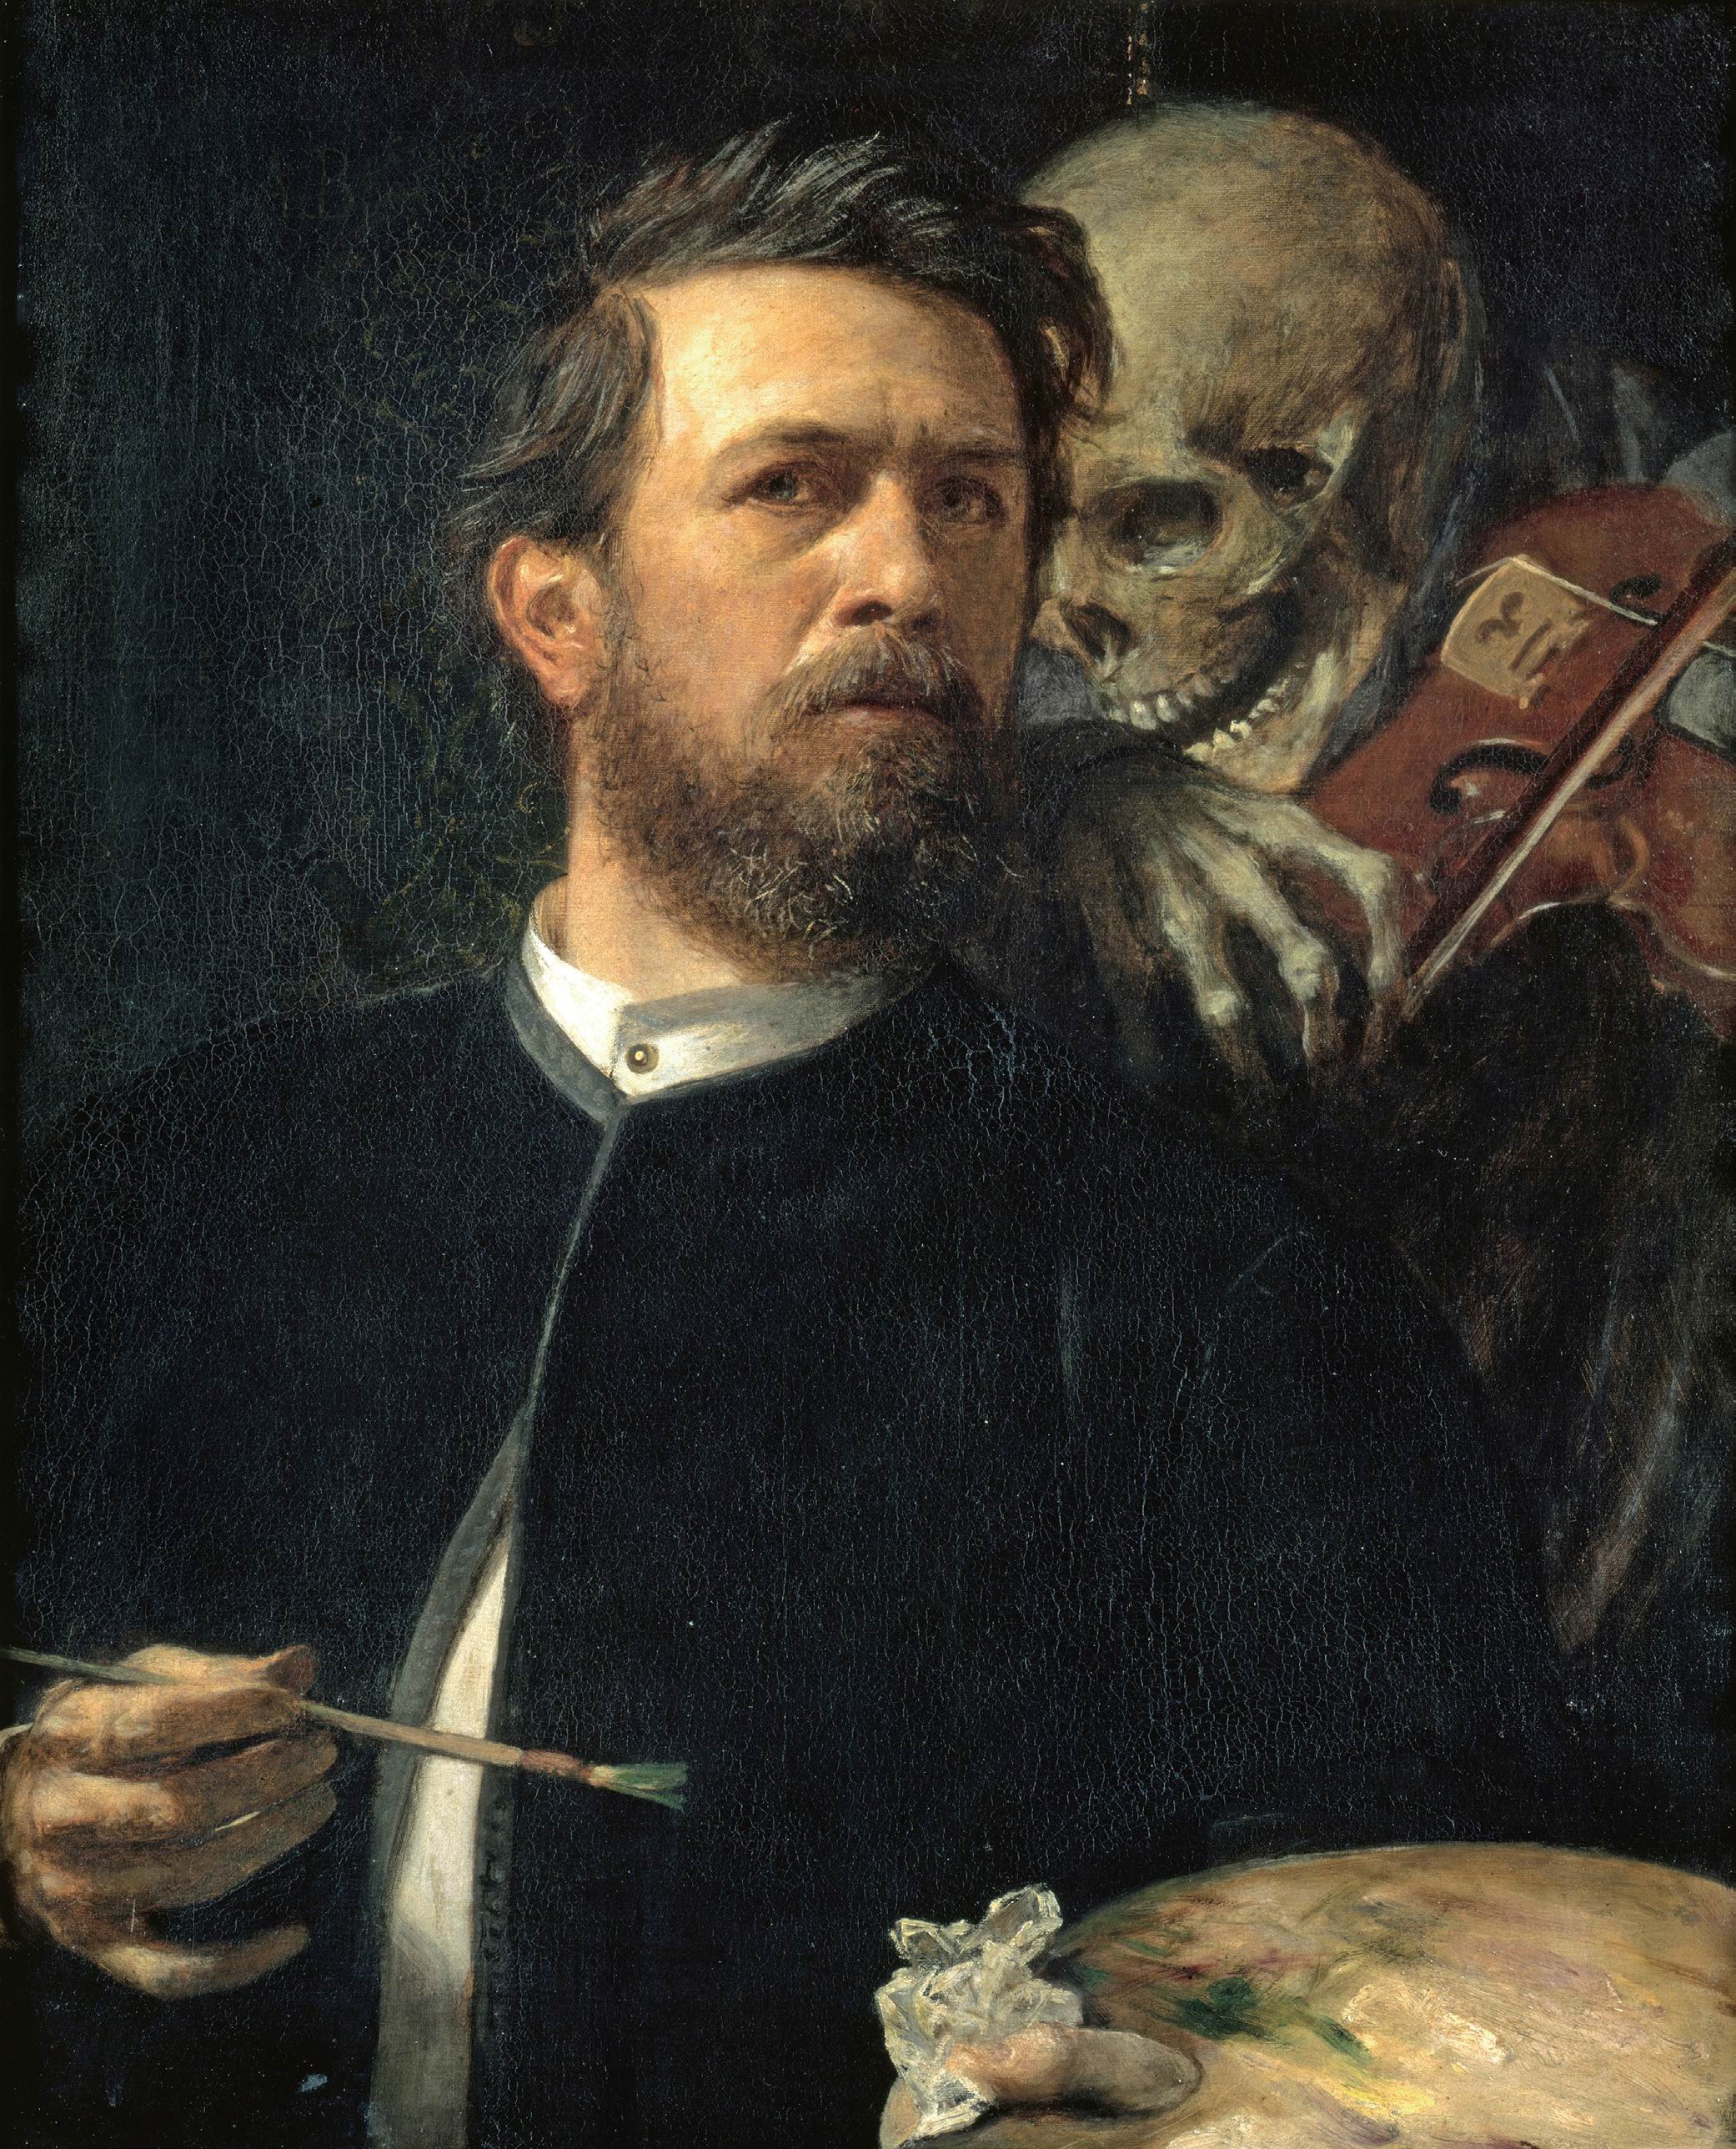 Oil Painting Oil On Canvas Arnold Bocklin Death Self Portraits Painters Violin Skull Men Beard Portr 2082x2577